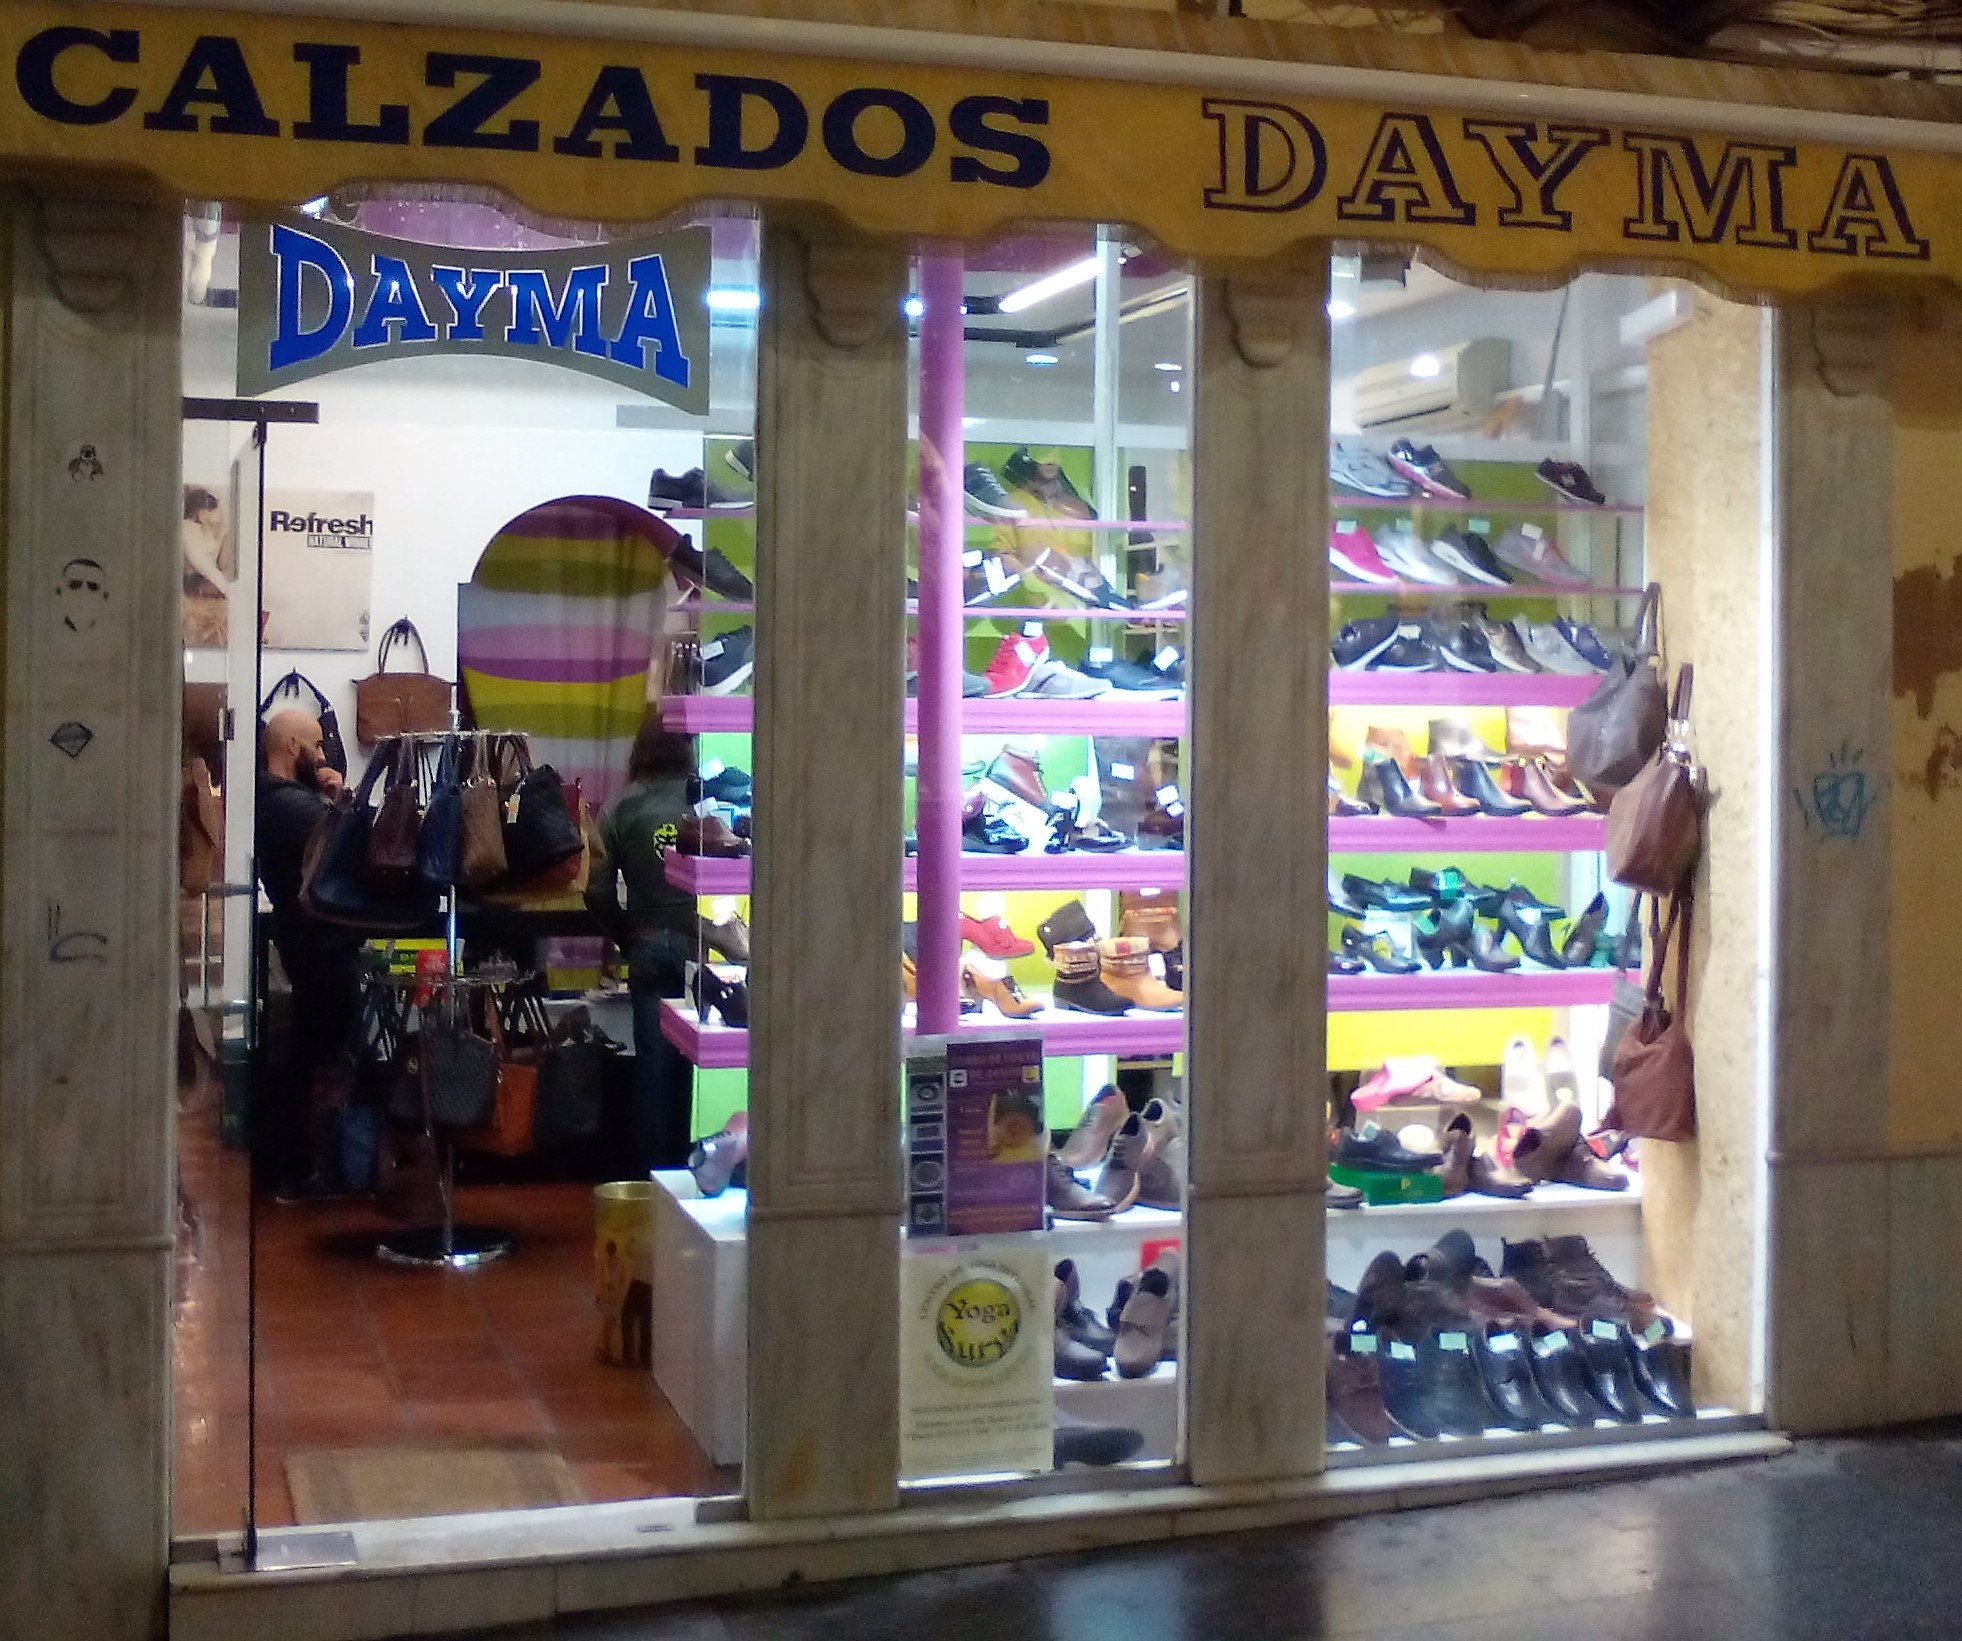 Zapateria Zafra Dayma - calzados